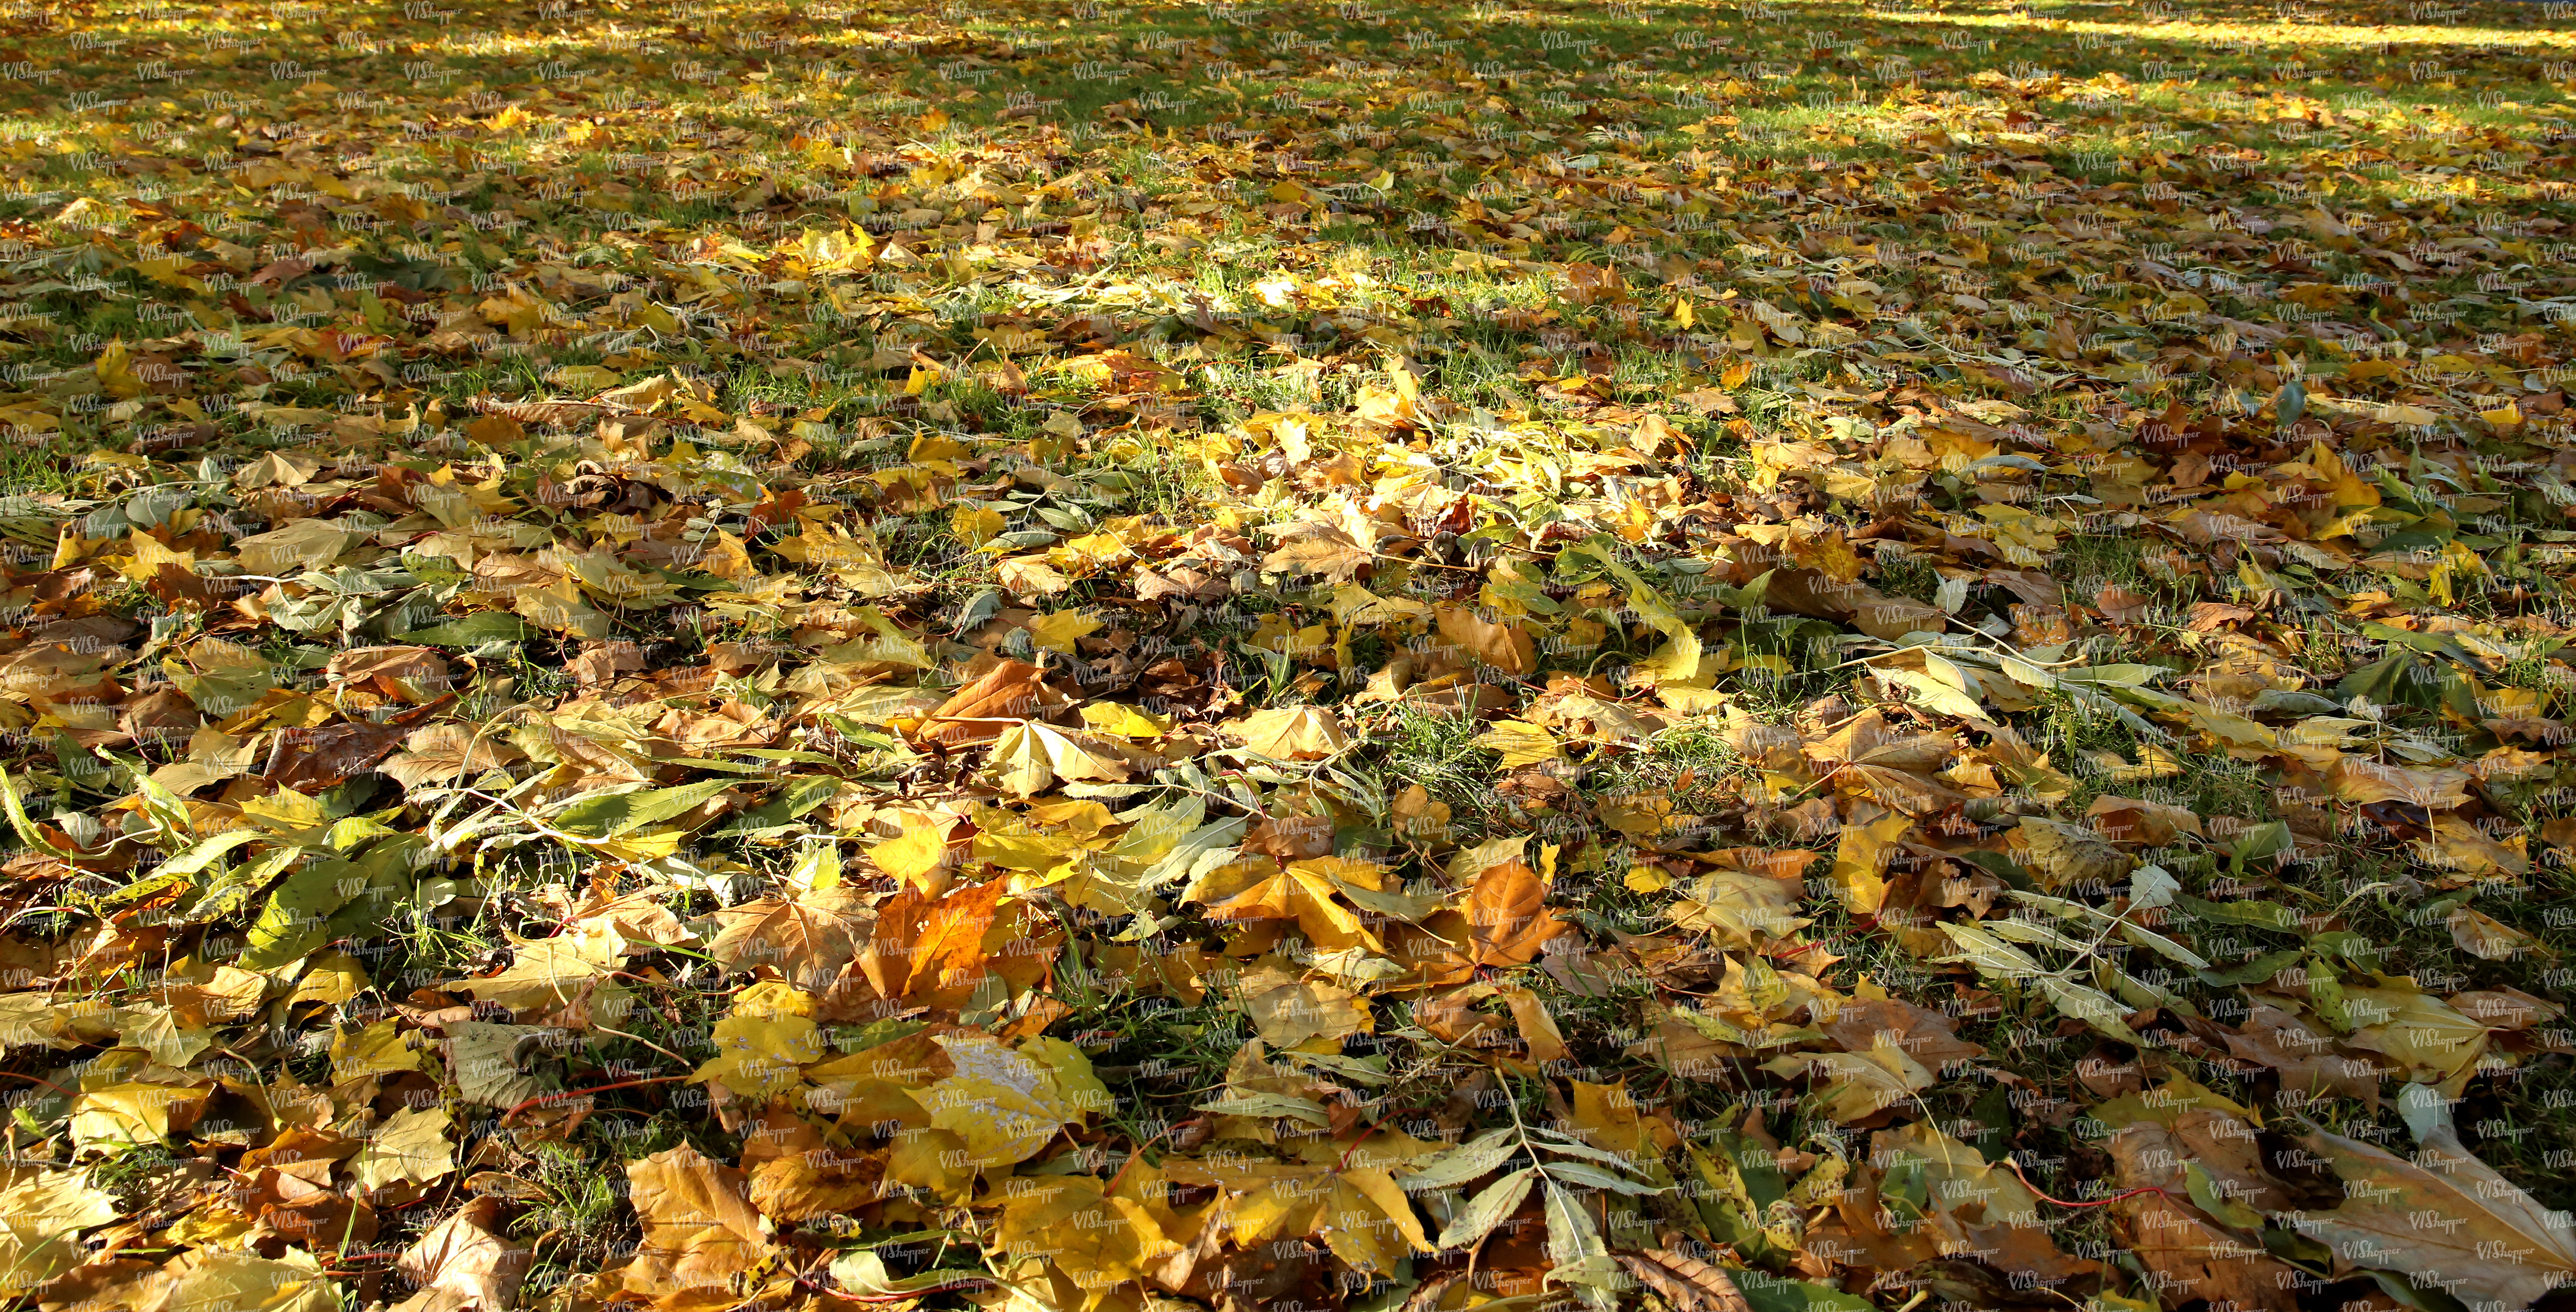 grass ground with autumn leaves - ground textures - VIShopper